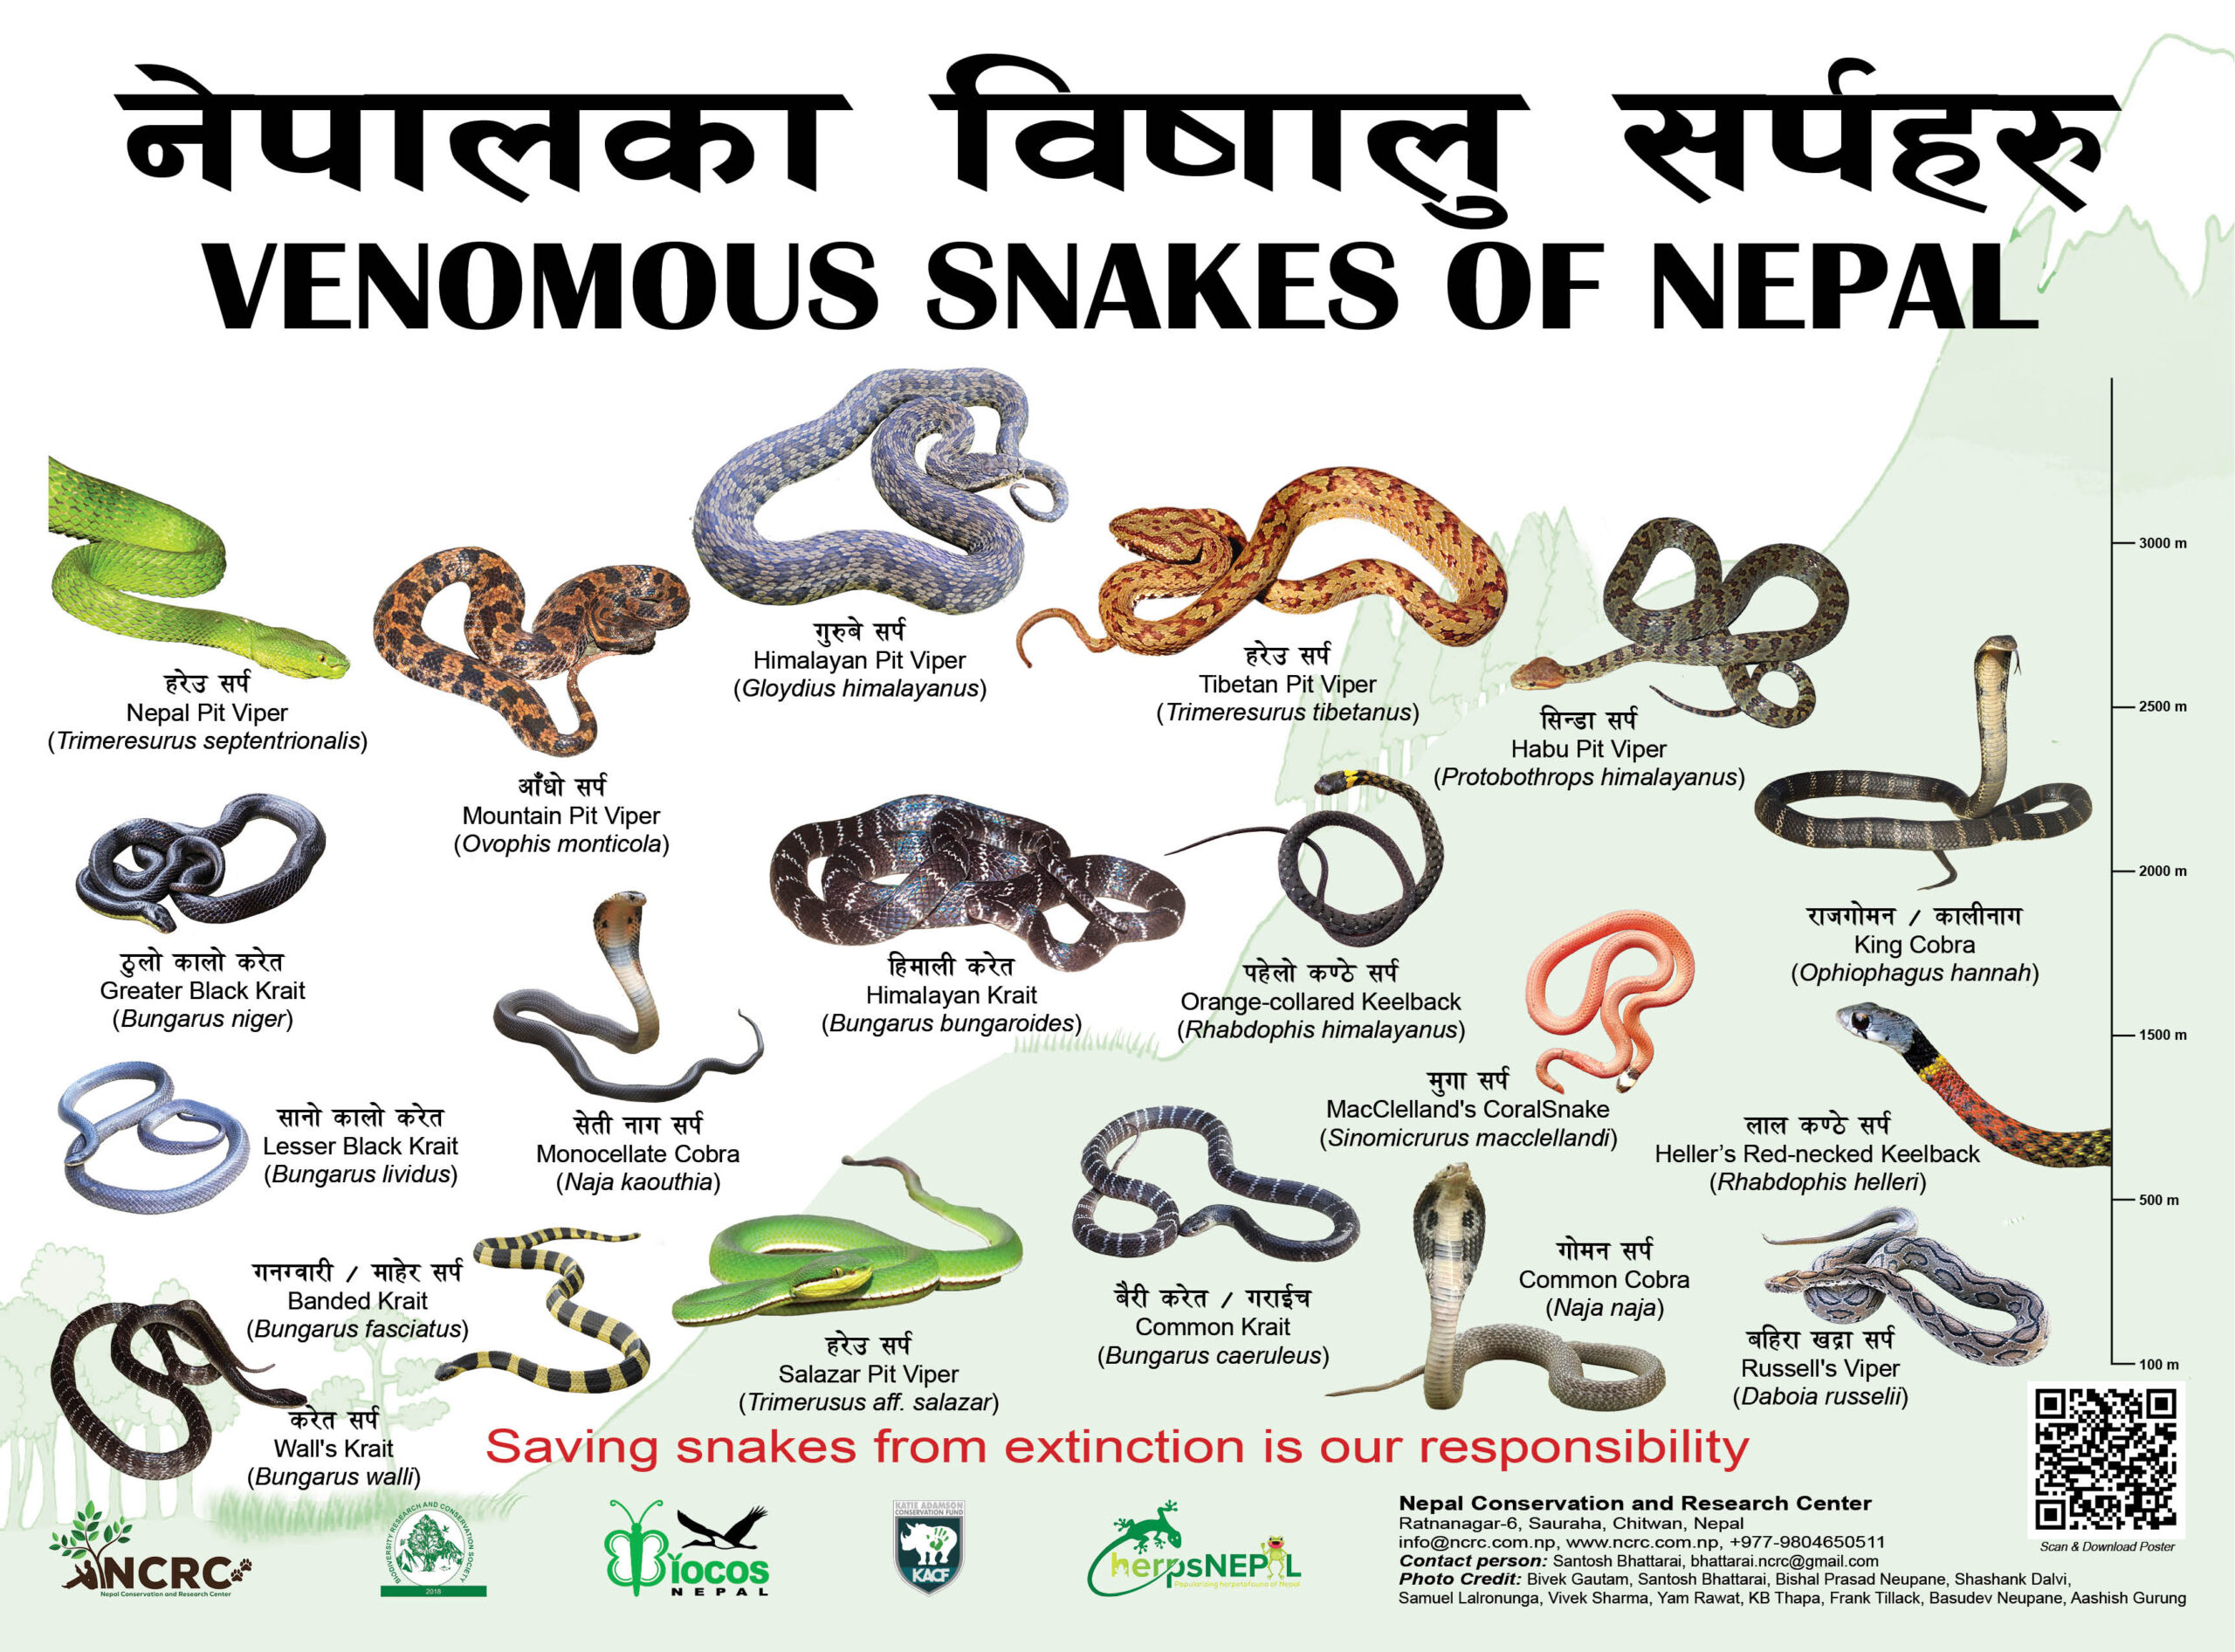 Venomous snakes of Nepal